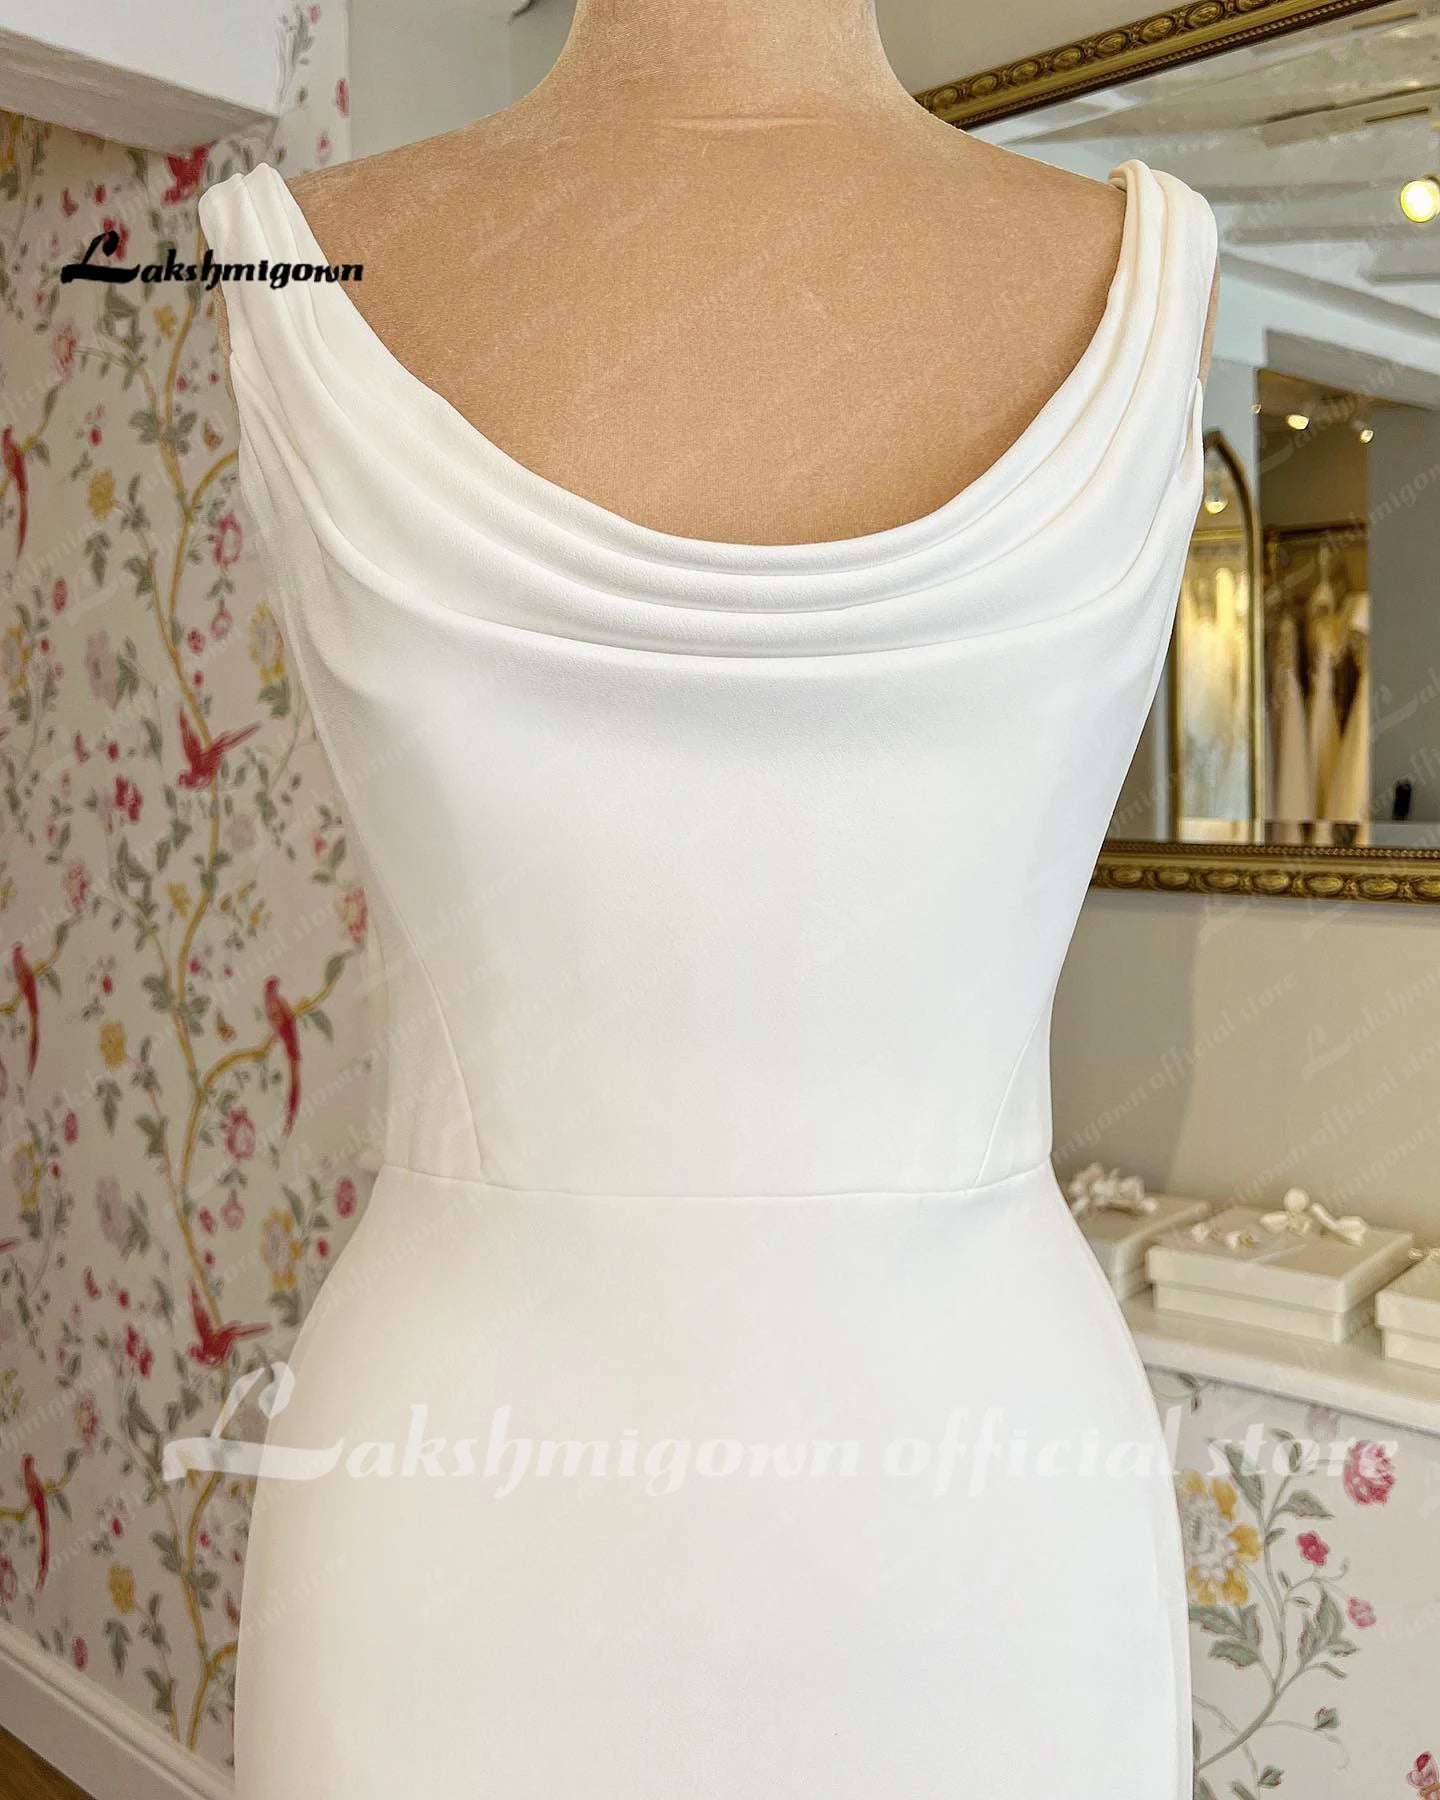 Lakshmigown Simple Crepe Wedding Dress Scoop Neck Tank Bridal Reception Gown vestido de noiva princesa Robe de mariee